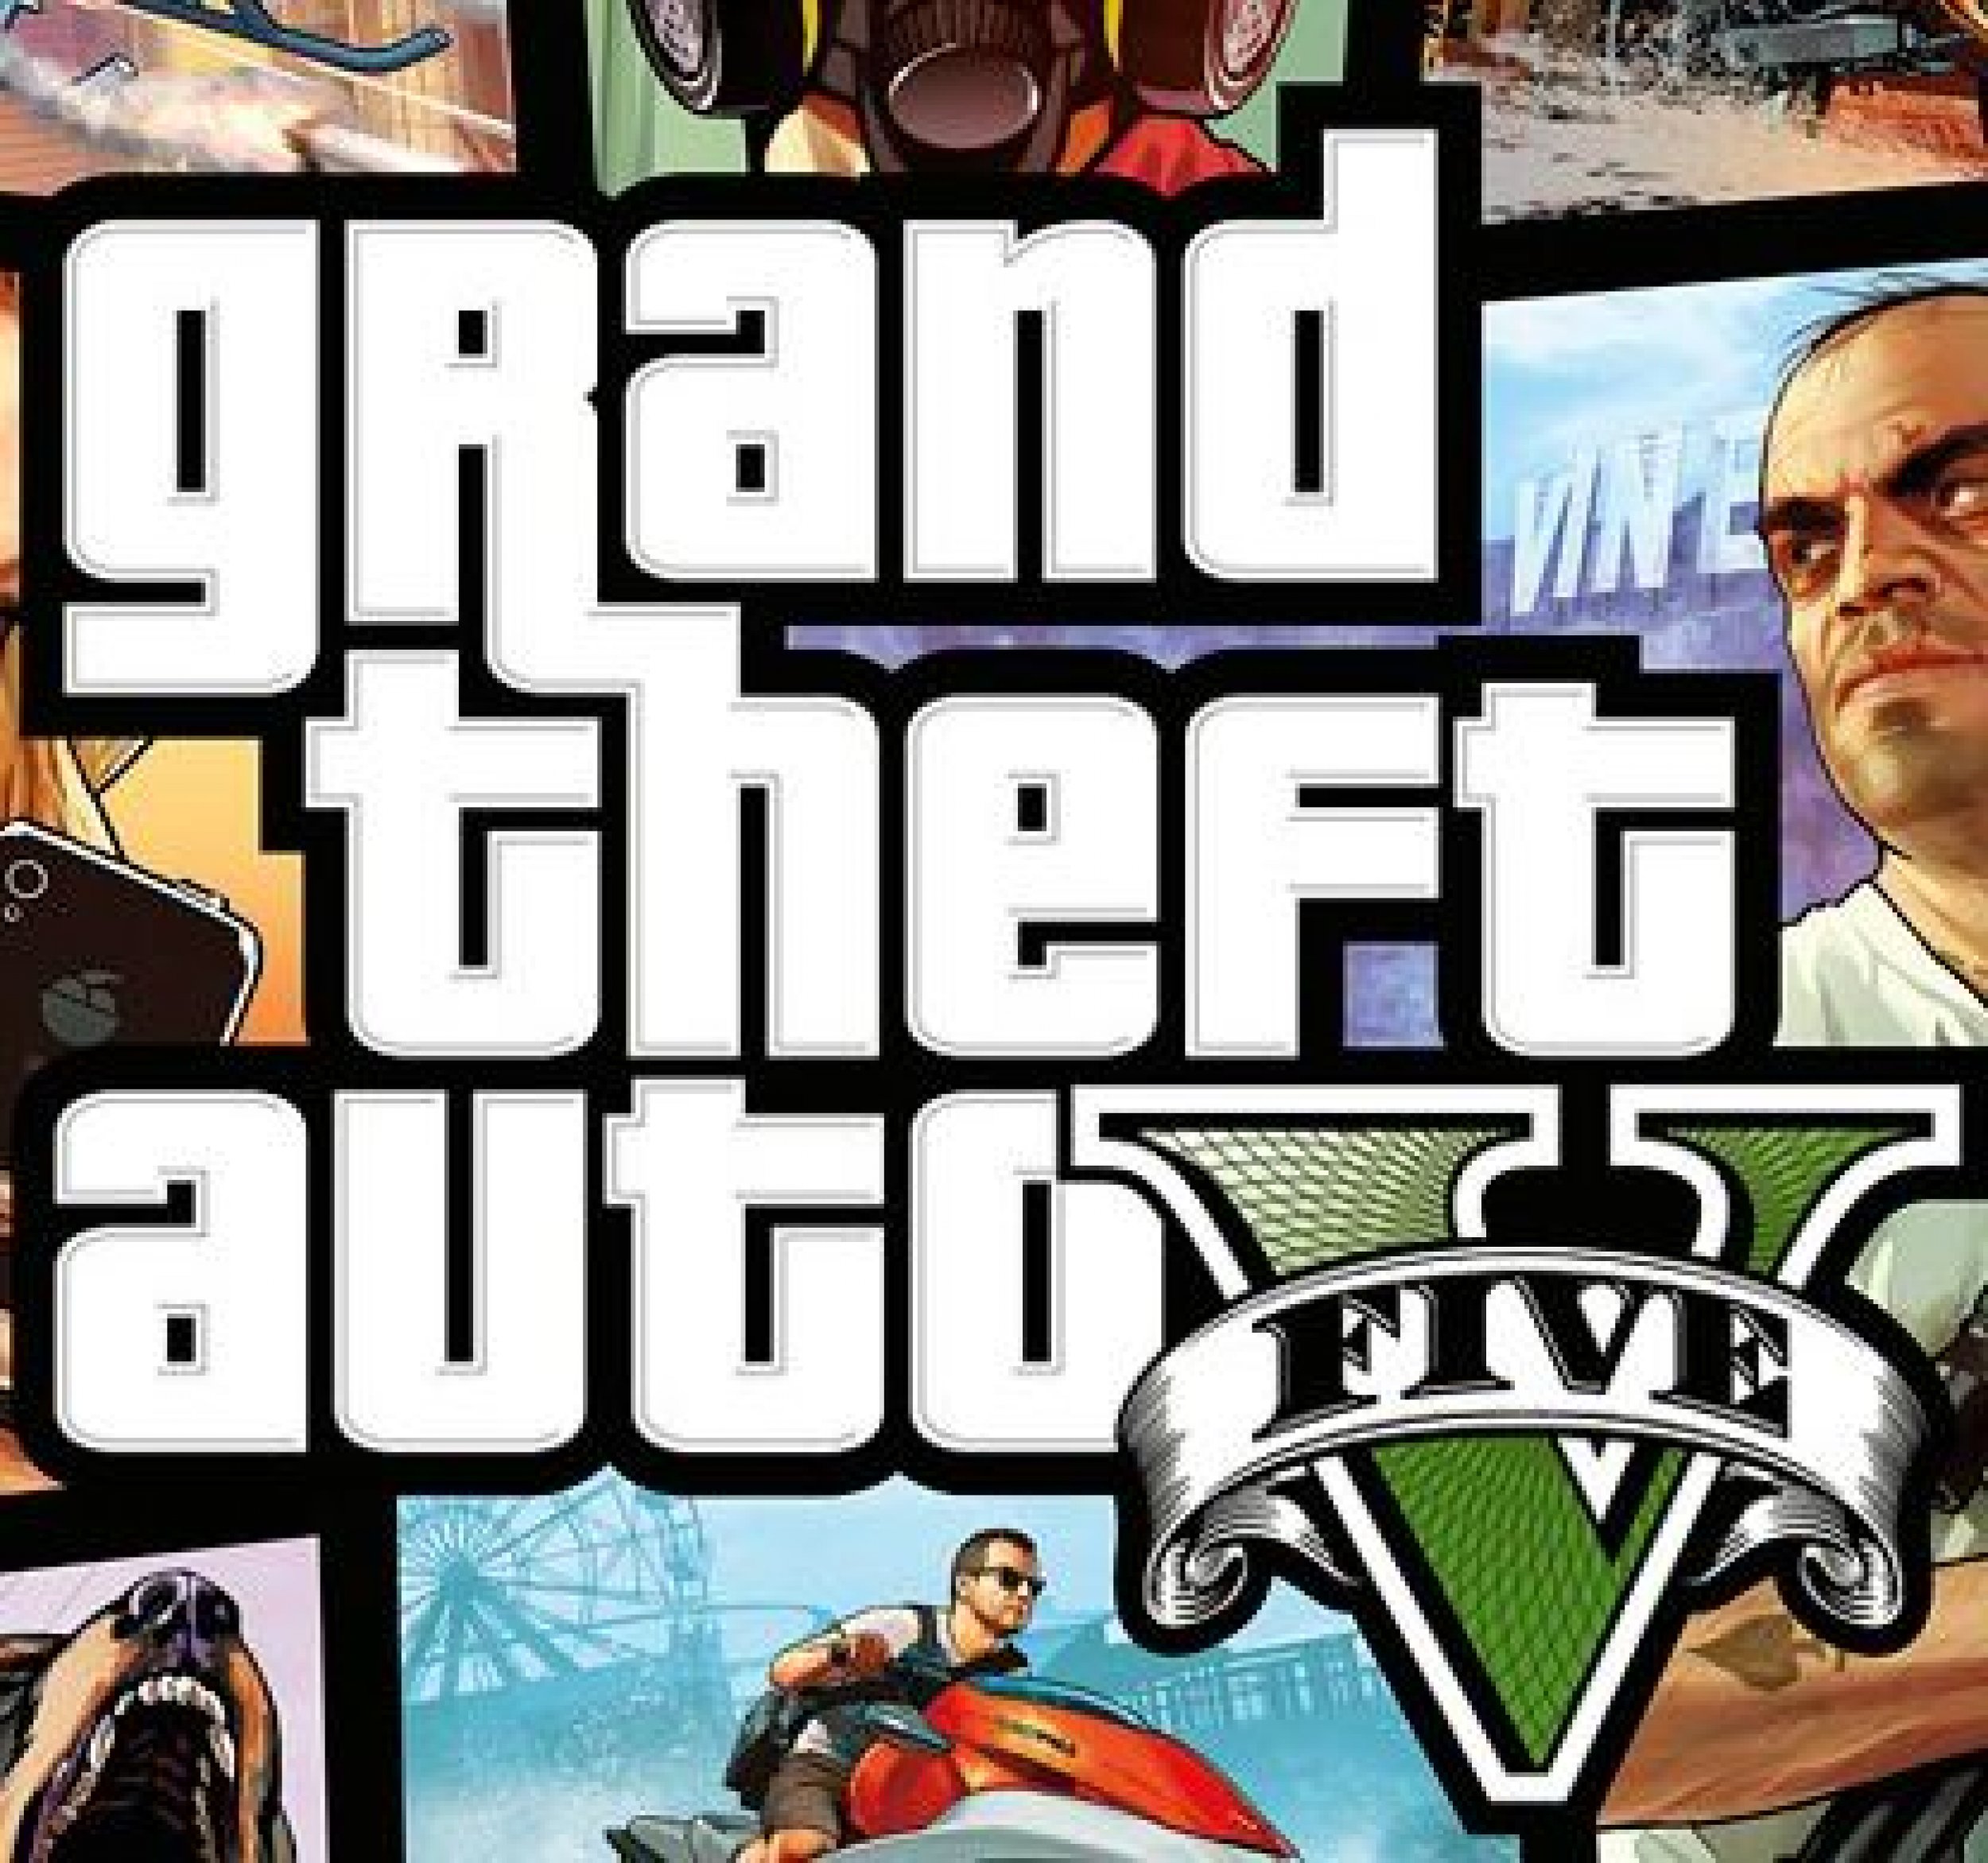 Jasje overdrijven Hamburger GTA 5': 'Grand Theft Auto 5' For PS3 Cheats, Codes, Tricks, Tips And Hints